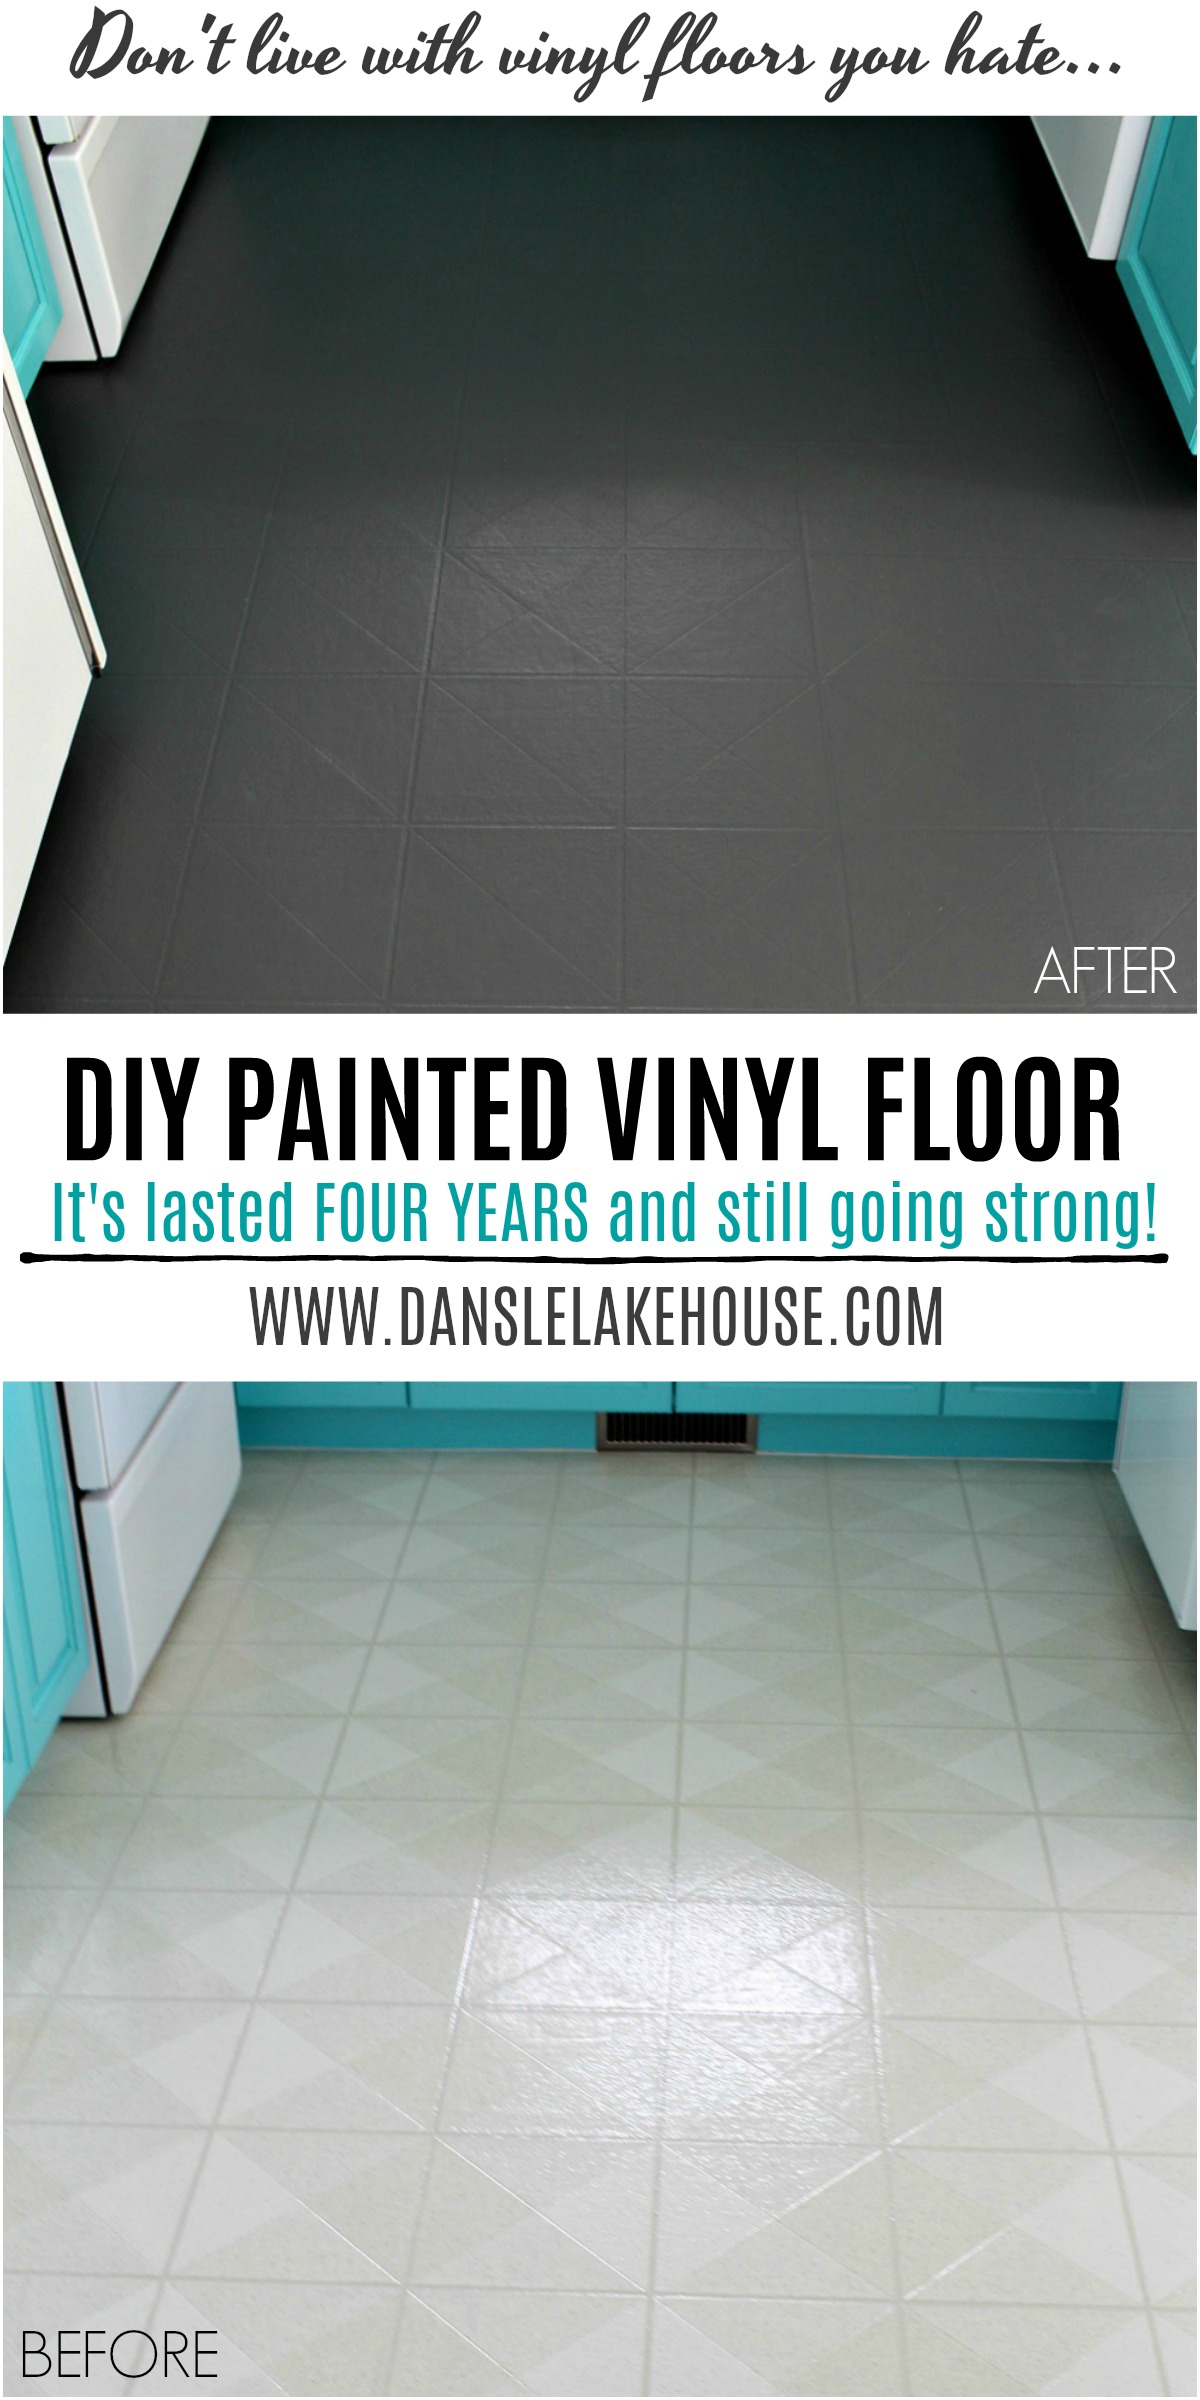 How Paint a Vinyl Floor | DIY Painted Floors | Dans le Lakehouse